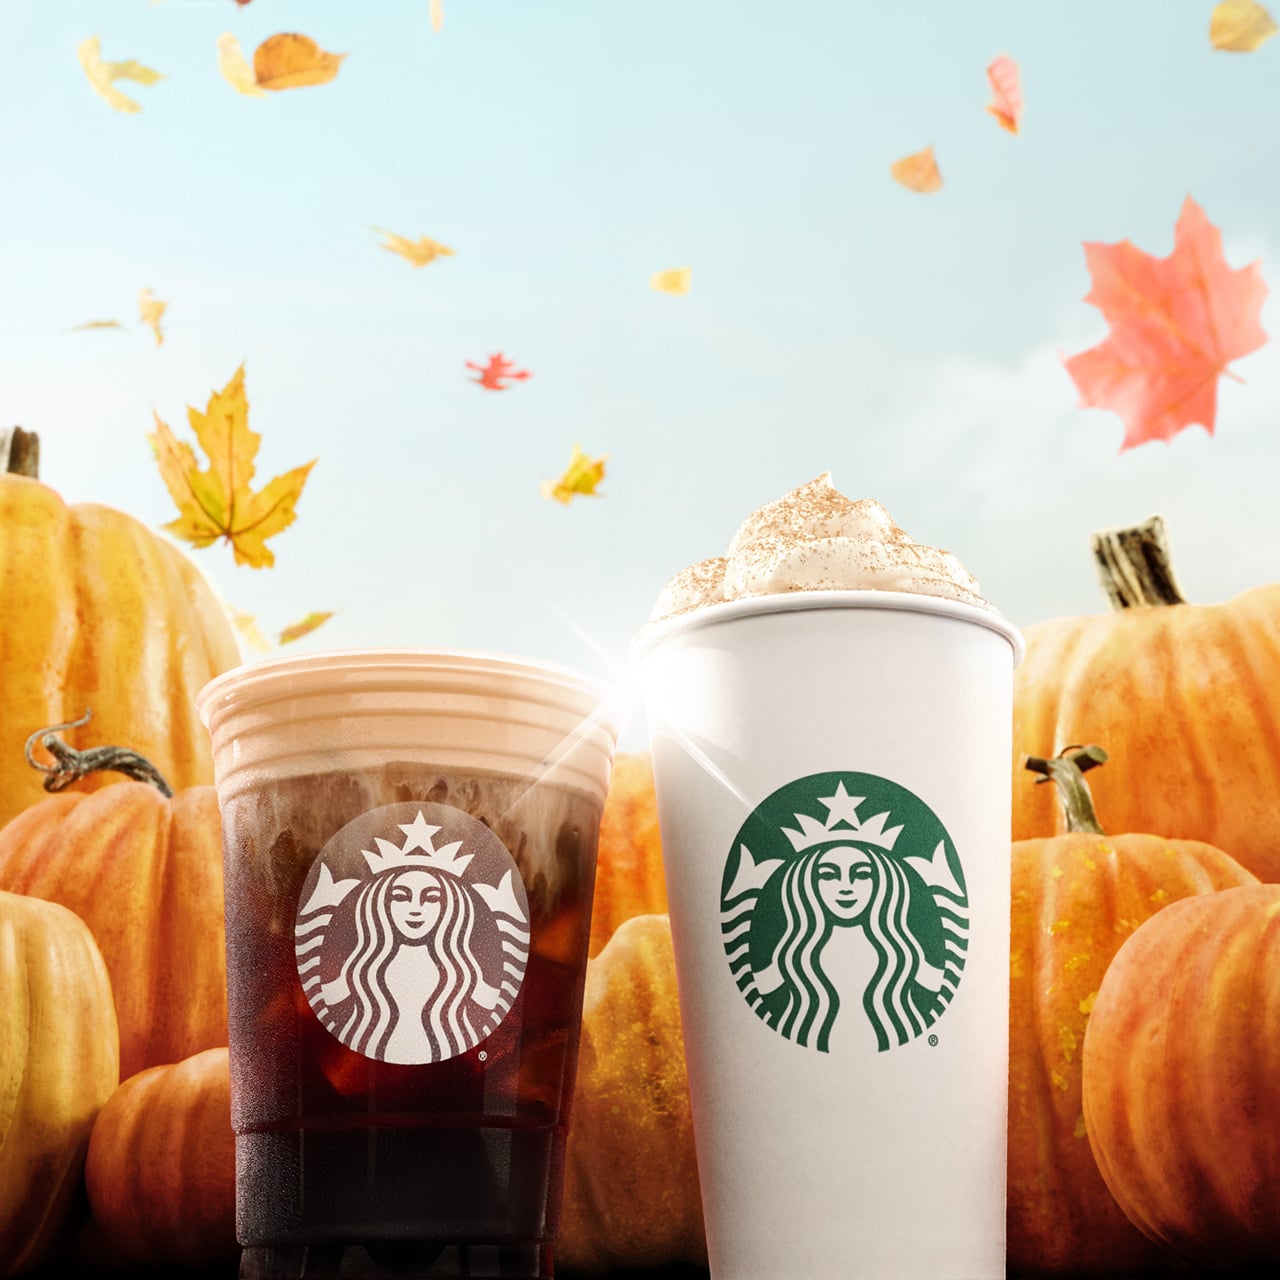 Starbucks's Pumpkin Spice Latte is back for the fall season.